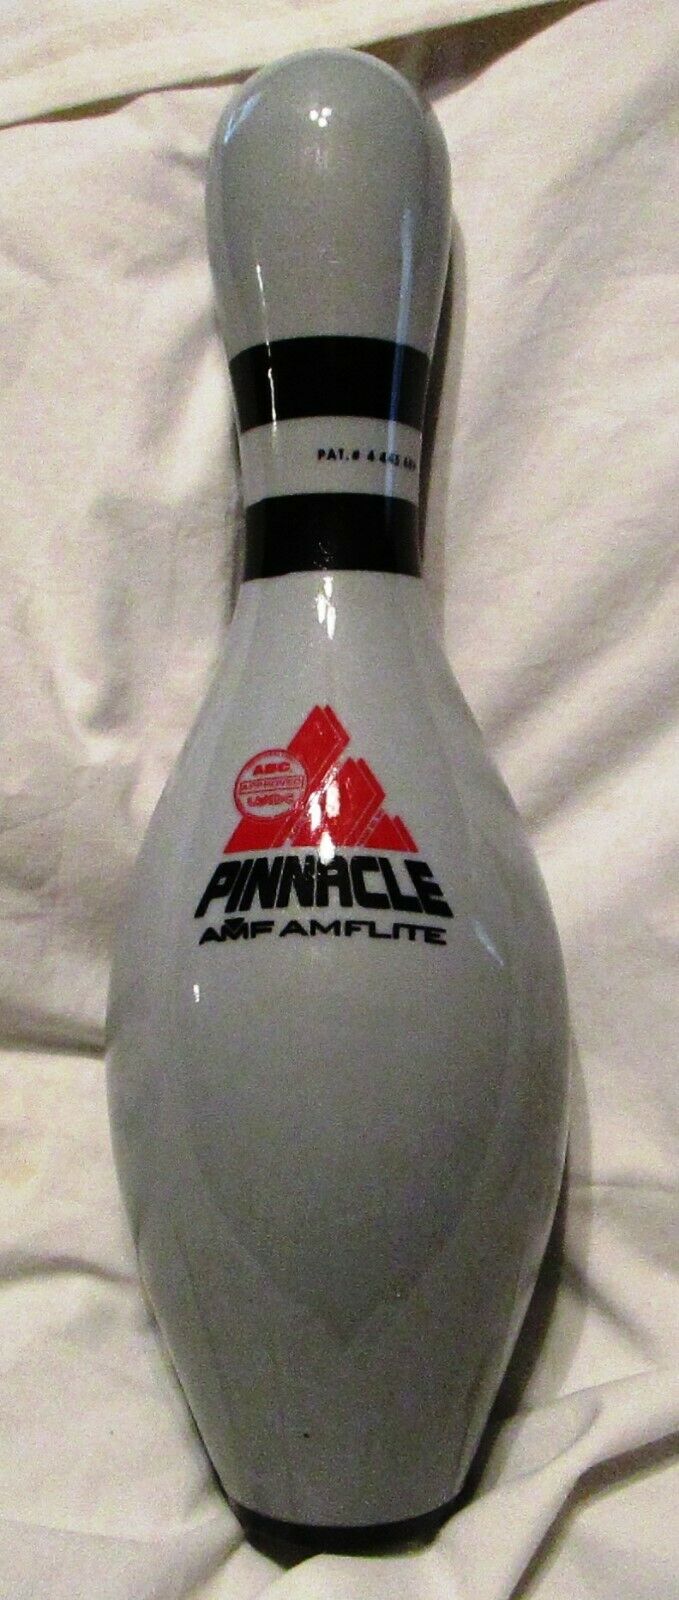 Gray AMF Amflite Pinnacle Regulation Bowling Pin